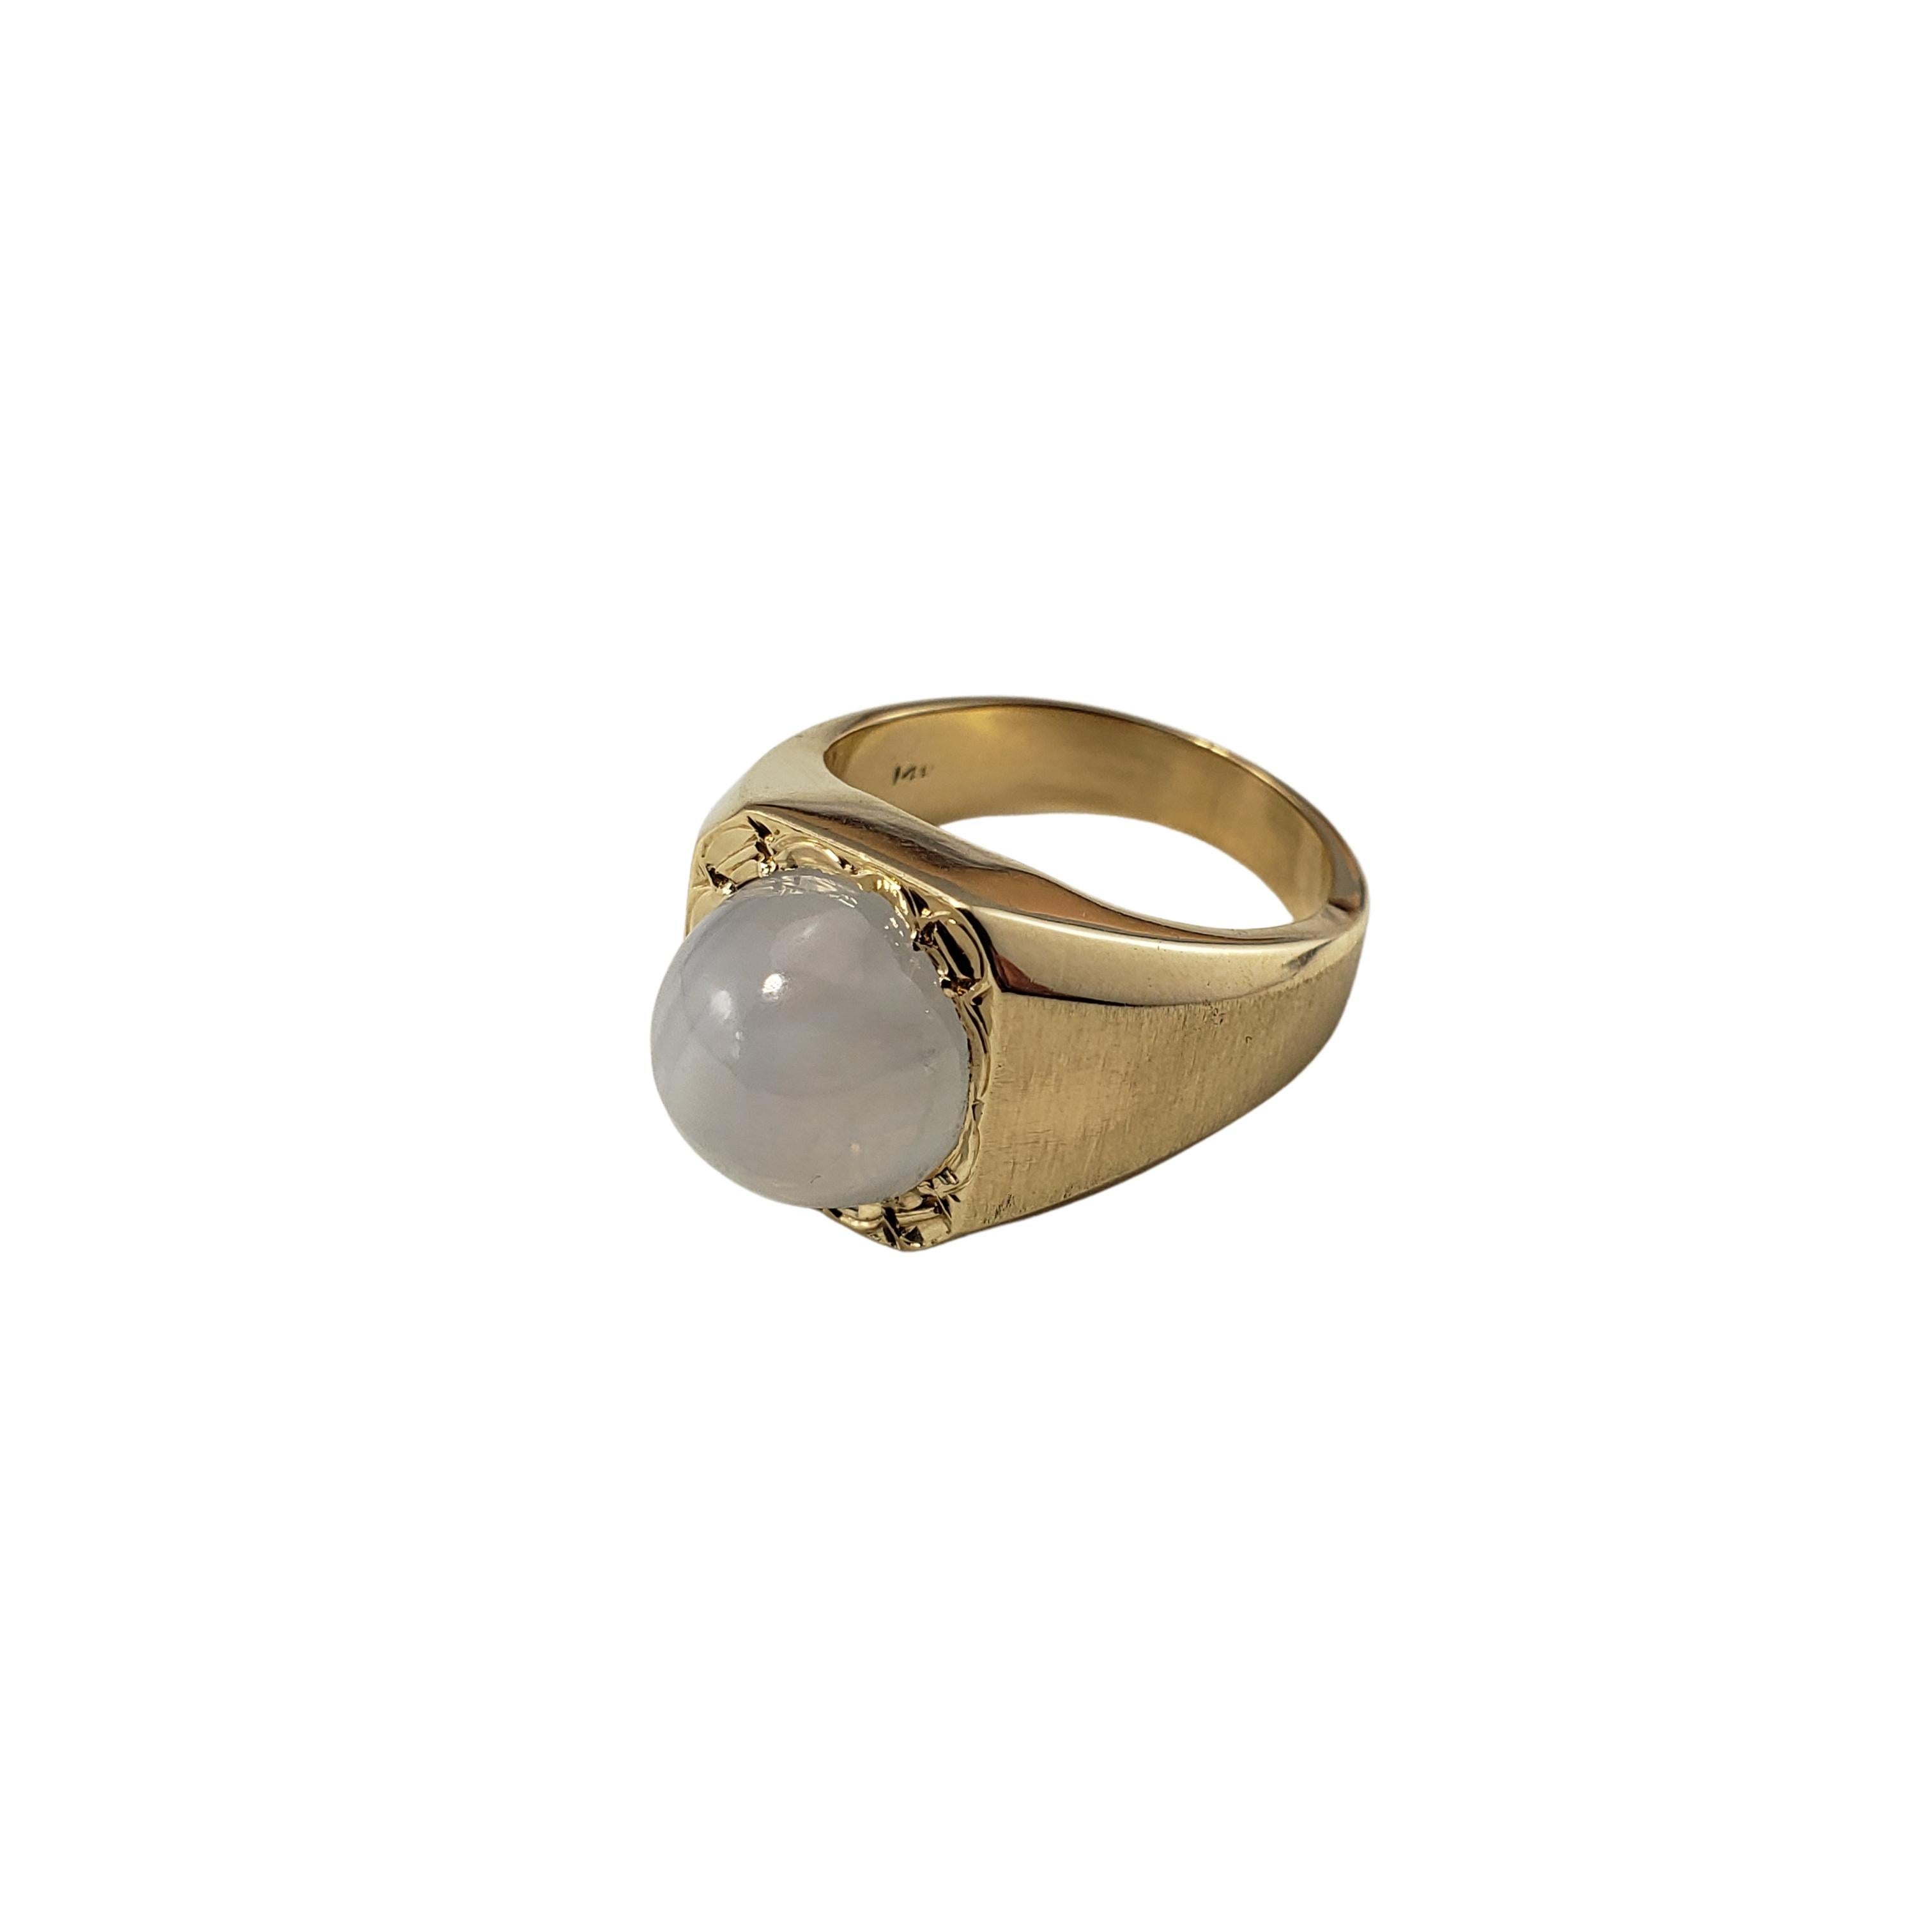 14k gold star sapphire ring